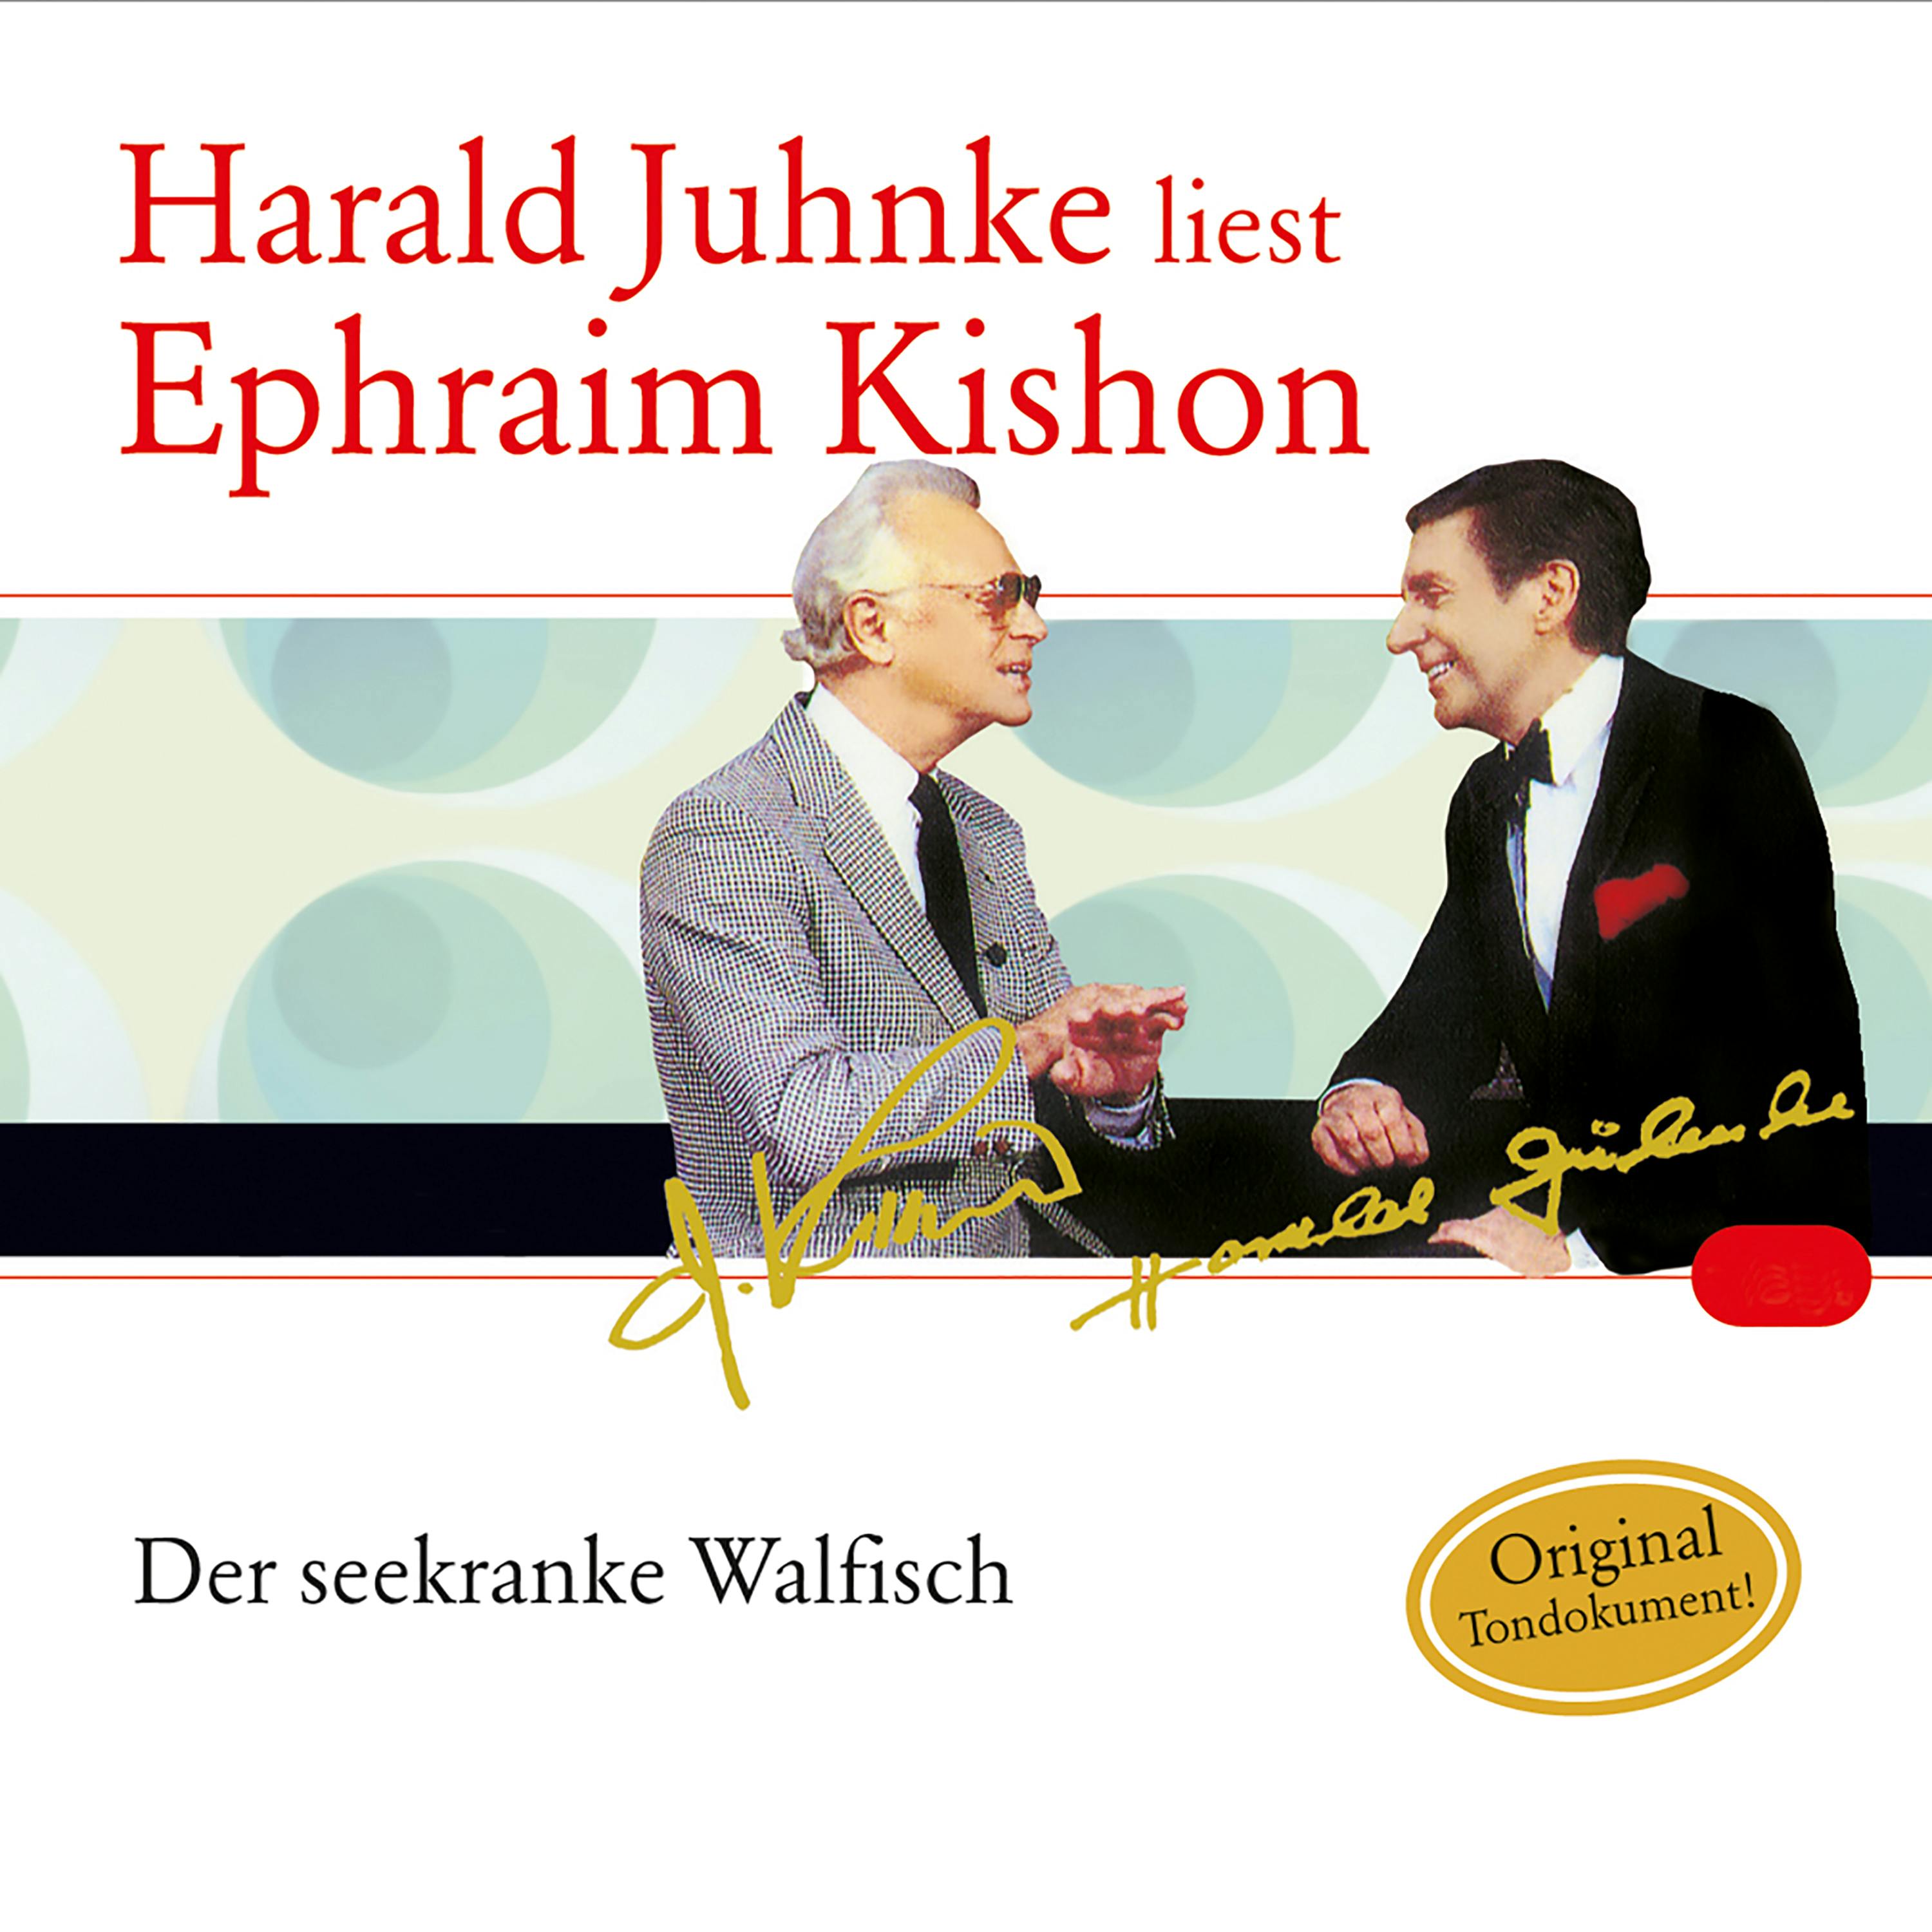 Der seekranke Walfisch: Harald Juhnke liest Ephraim Kishon - undefined